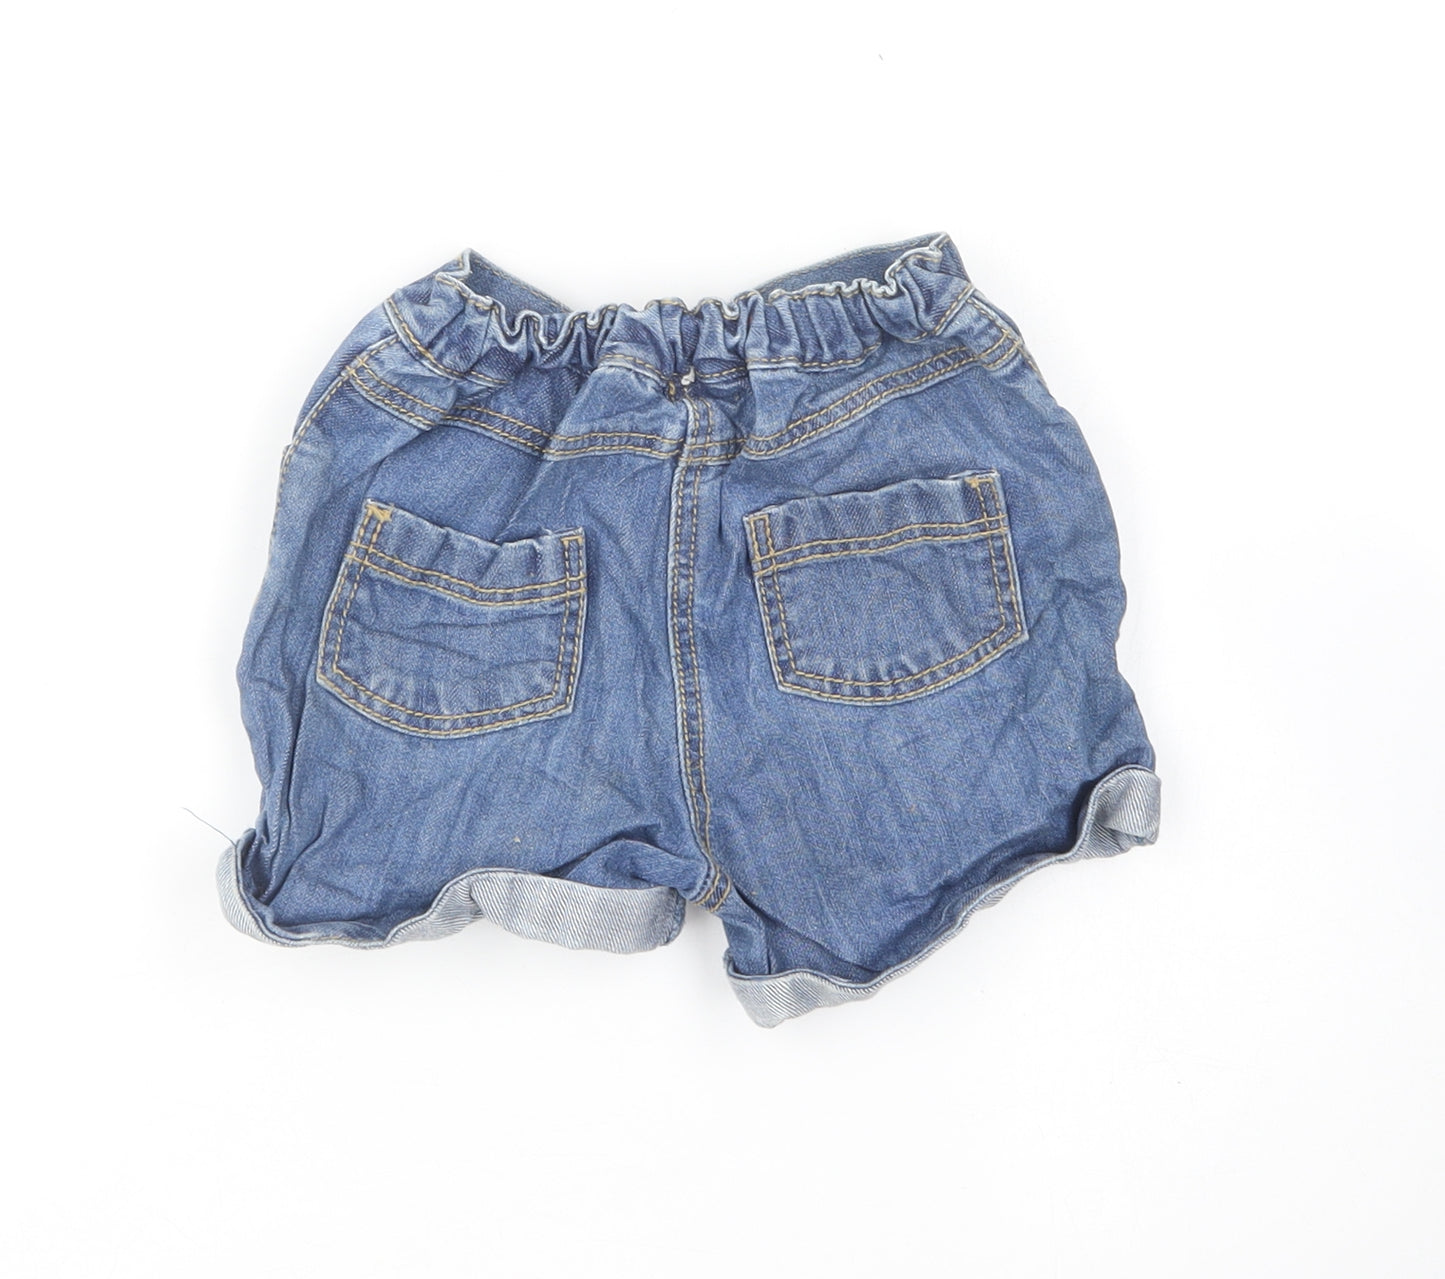 George Girls Blue  Cotton Hot Pants Shorts Size 2-3 Years  Regular